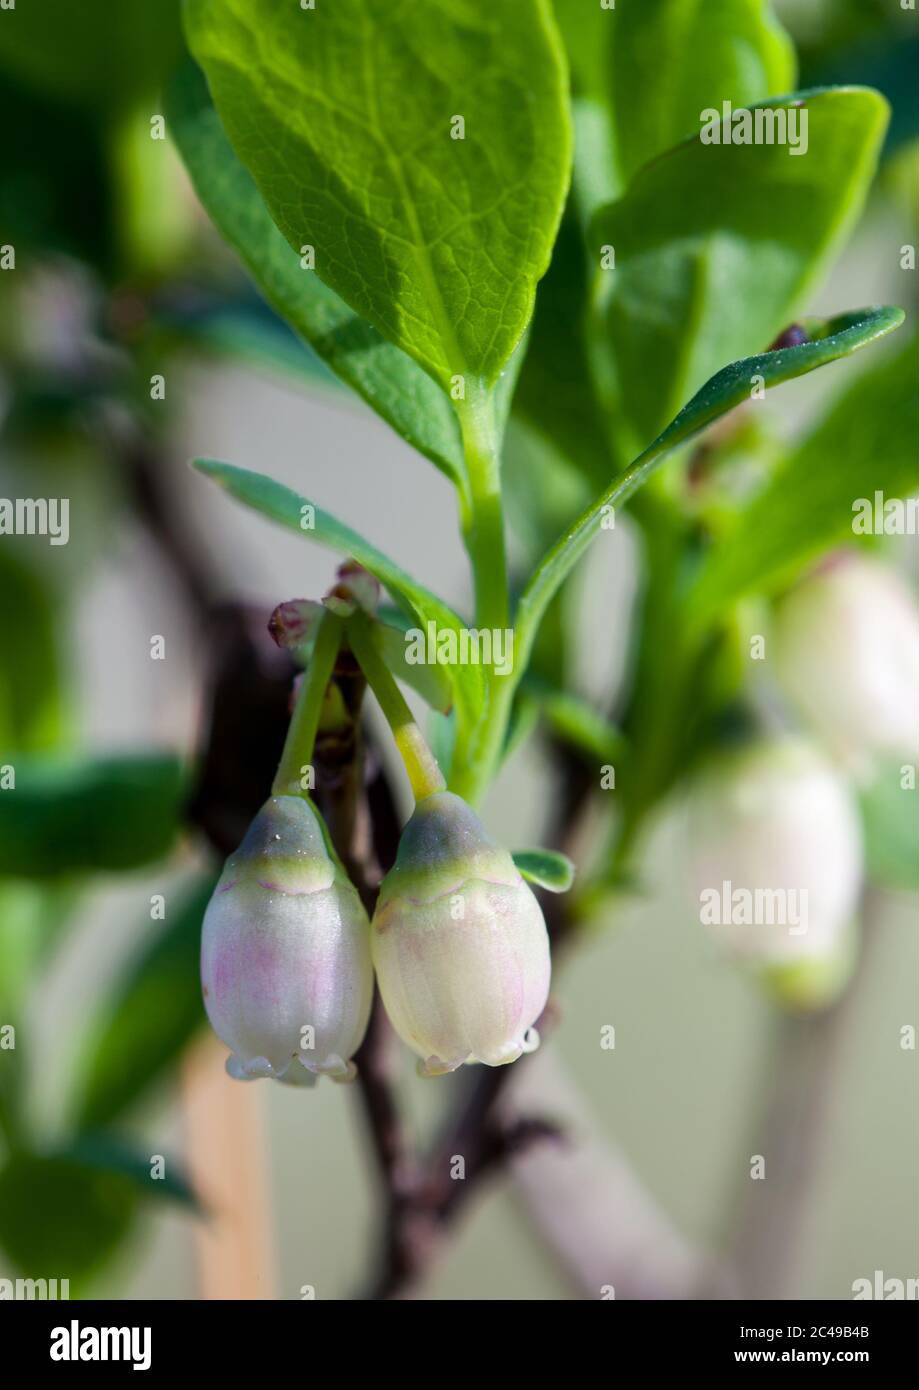 Bog bilberry (Vaccinium uliginosum) Stock Photo